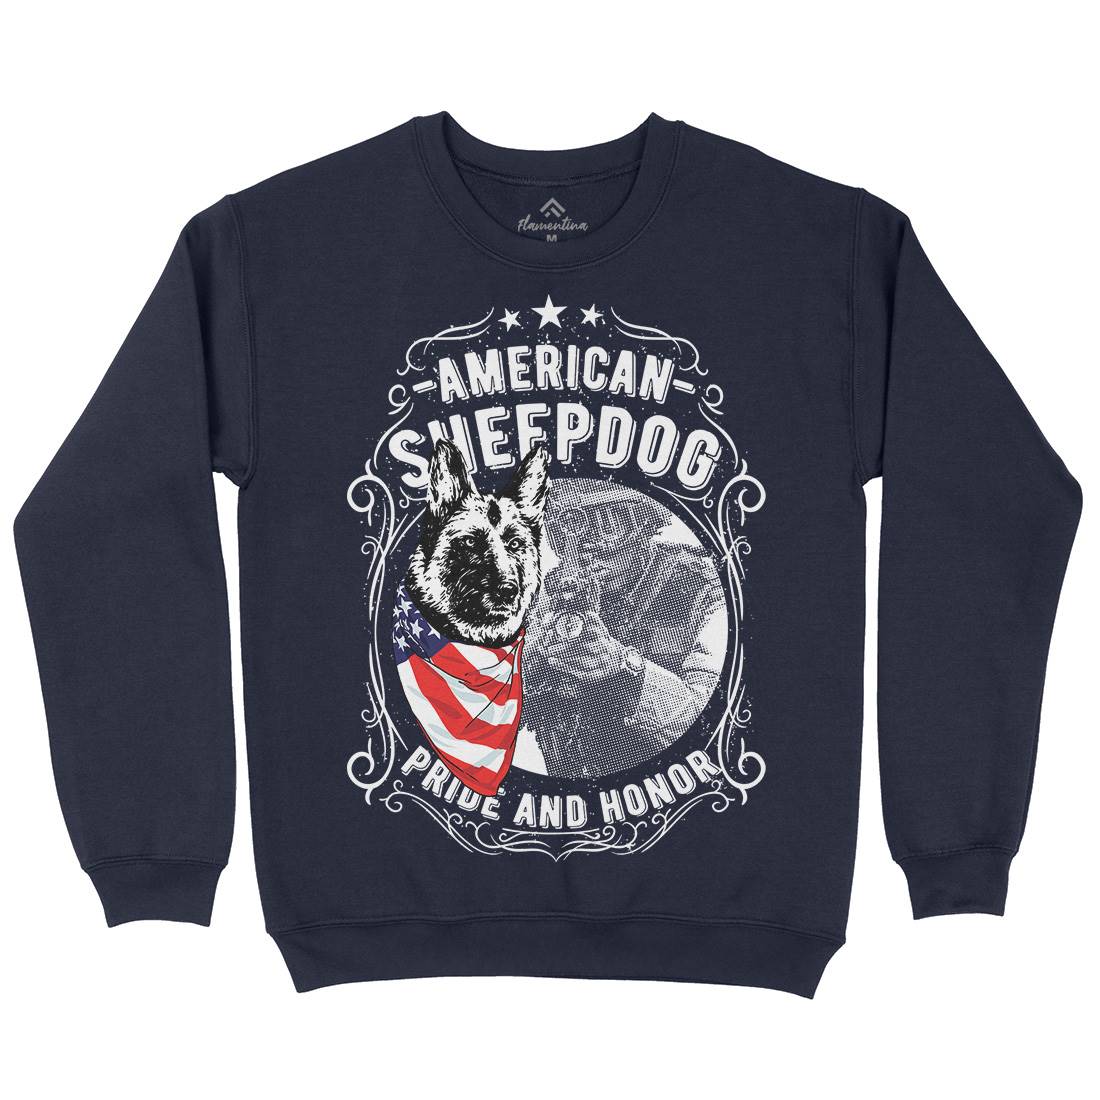 Sheepdog Mens Crew Neck Sweatshirt American C904